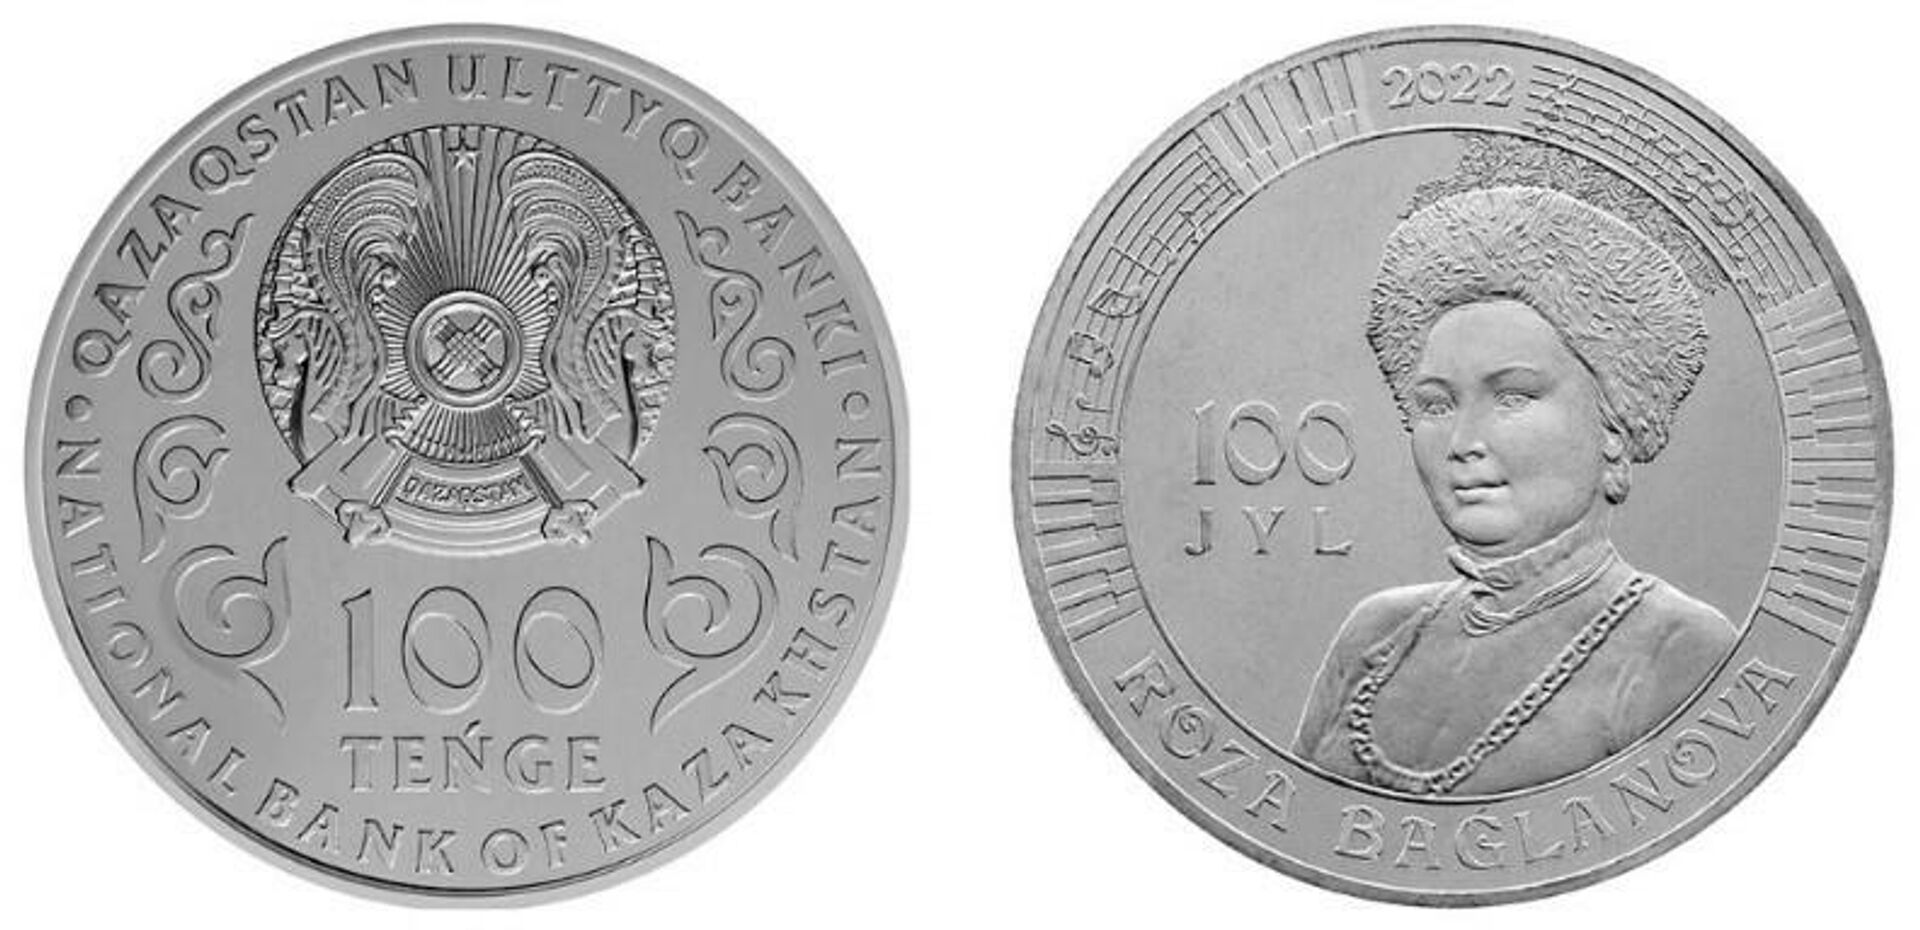 Коллекционная монетп ROZA BAǴLANOVA. 100 JYL - Sputnik Казахстан, 1920, 26.07.2022